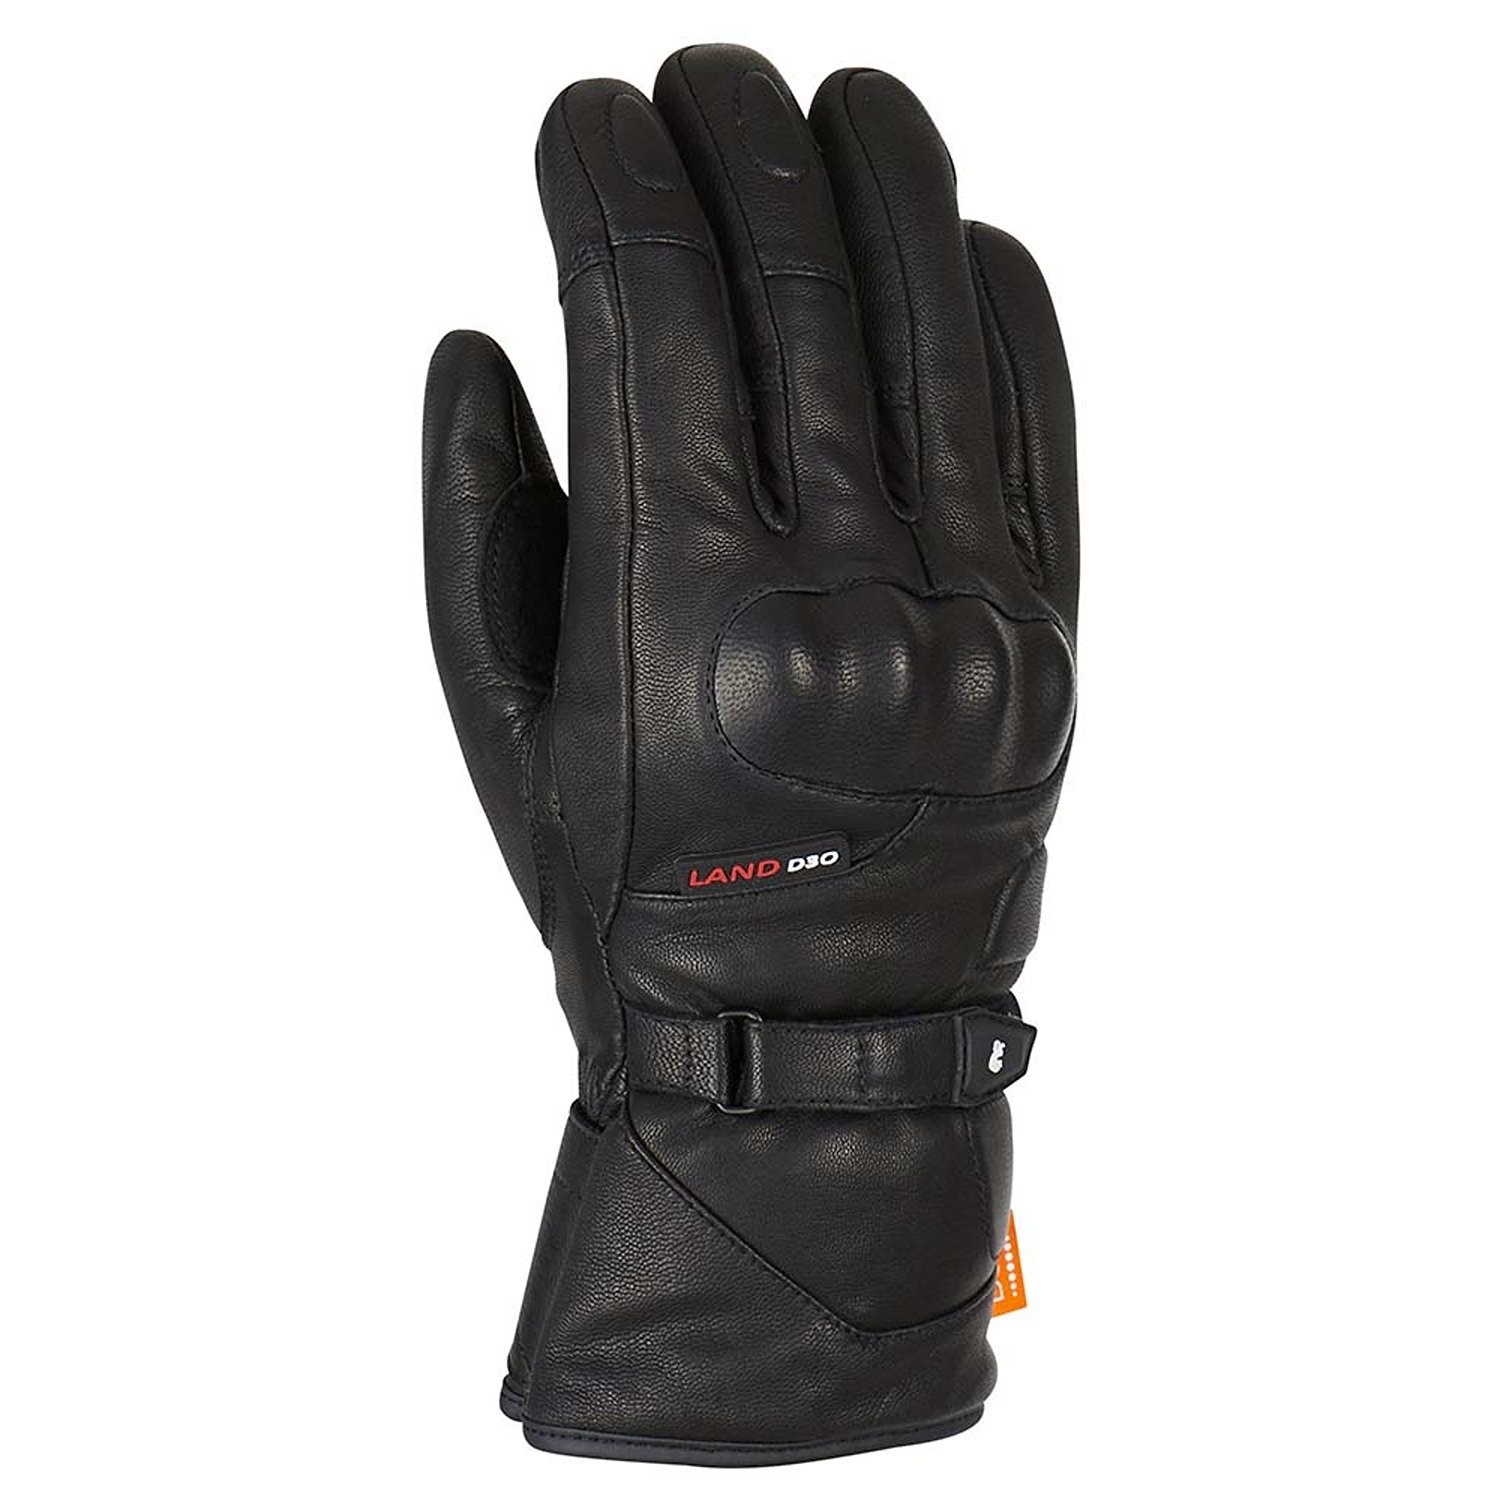 Image of Furygan Land DK D30 Gloves Black Size 2XL EN